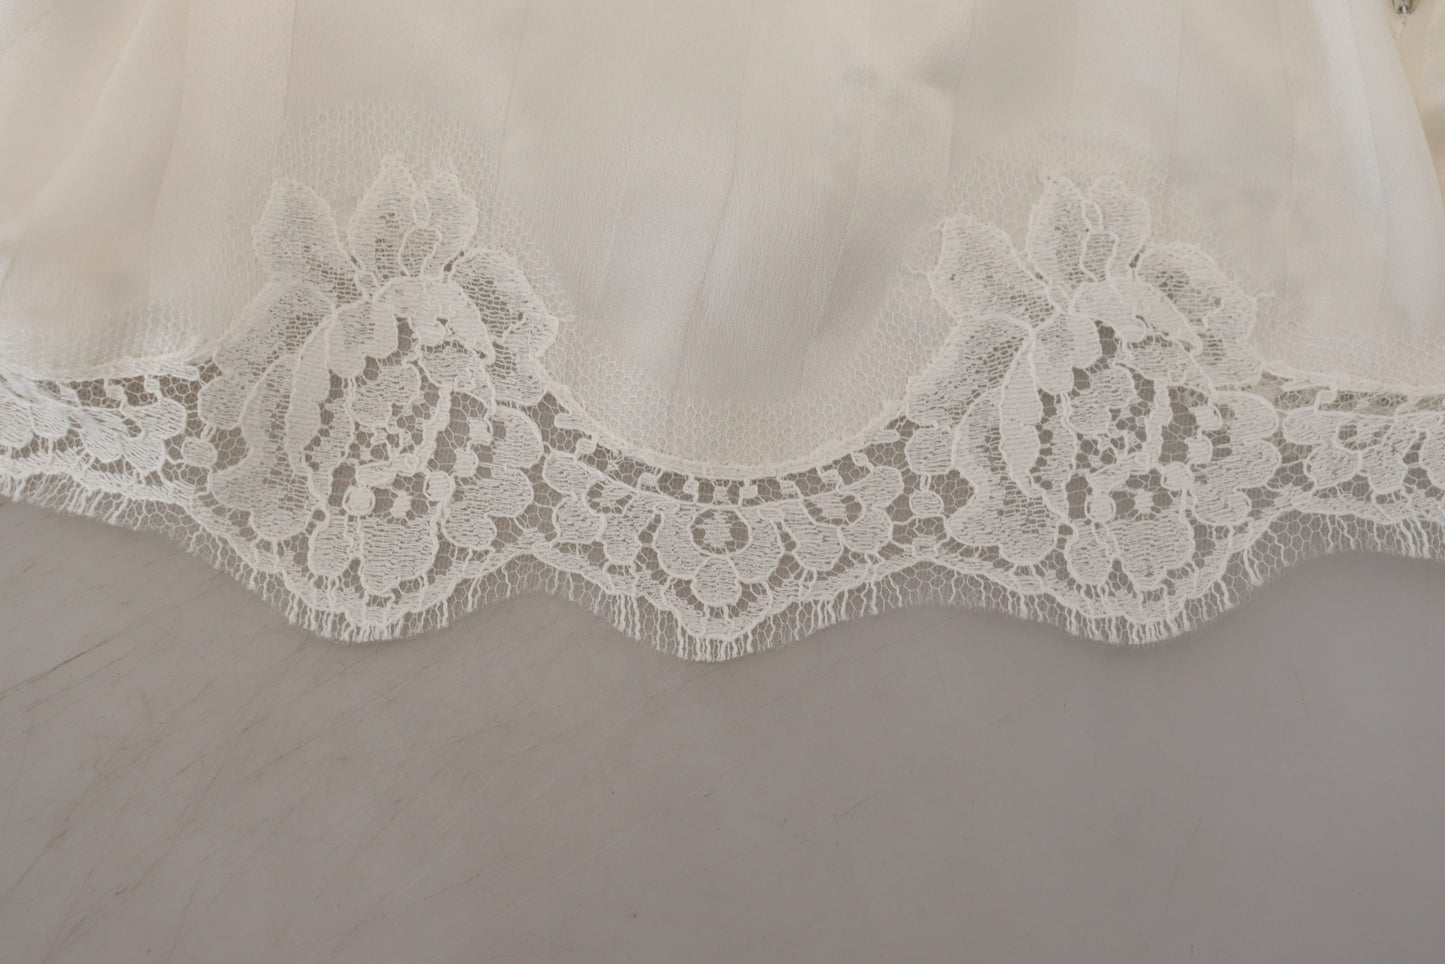 White Silk Floral Lace Lingerie Underwear